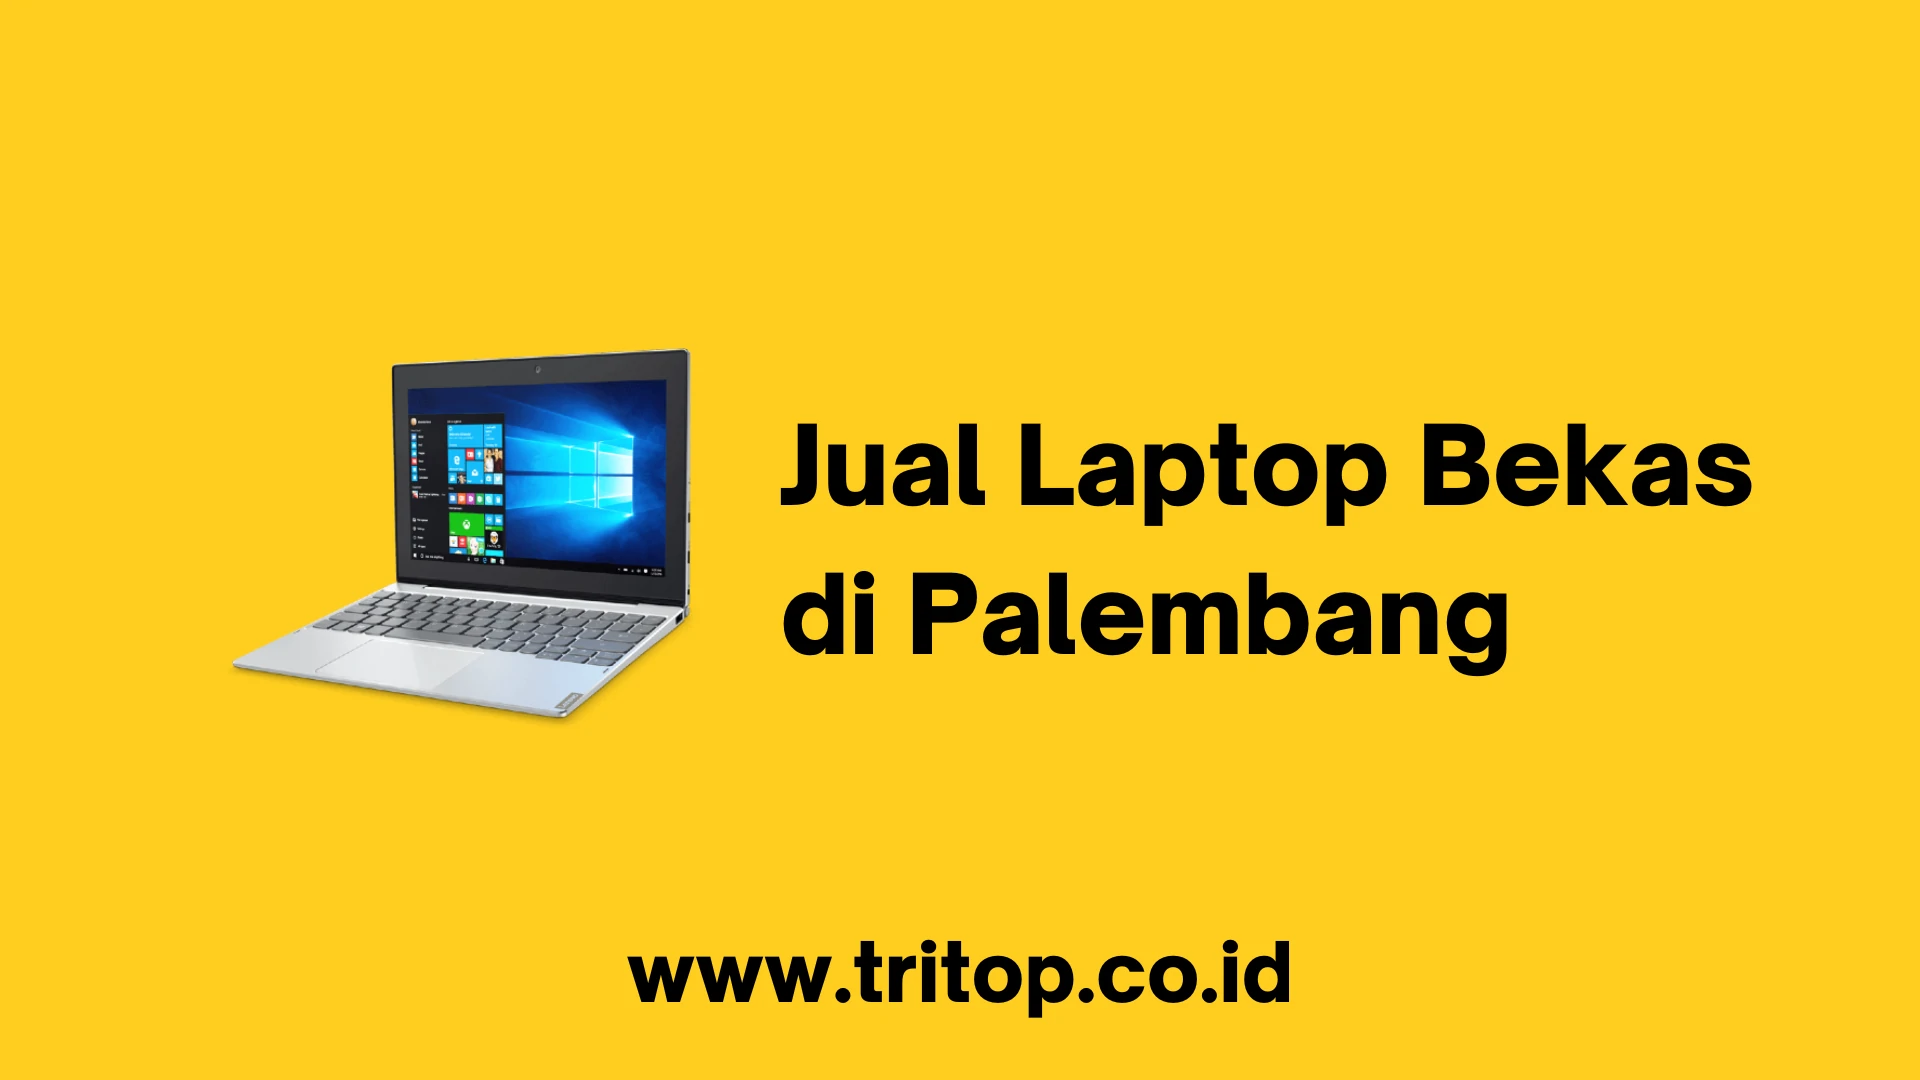 Jual Laptop Bekas di Palembang